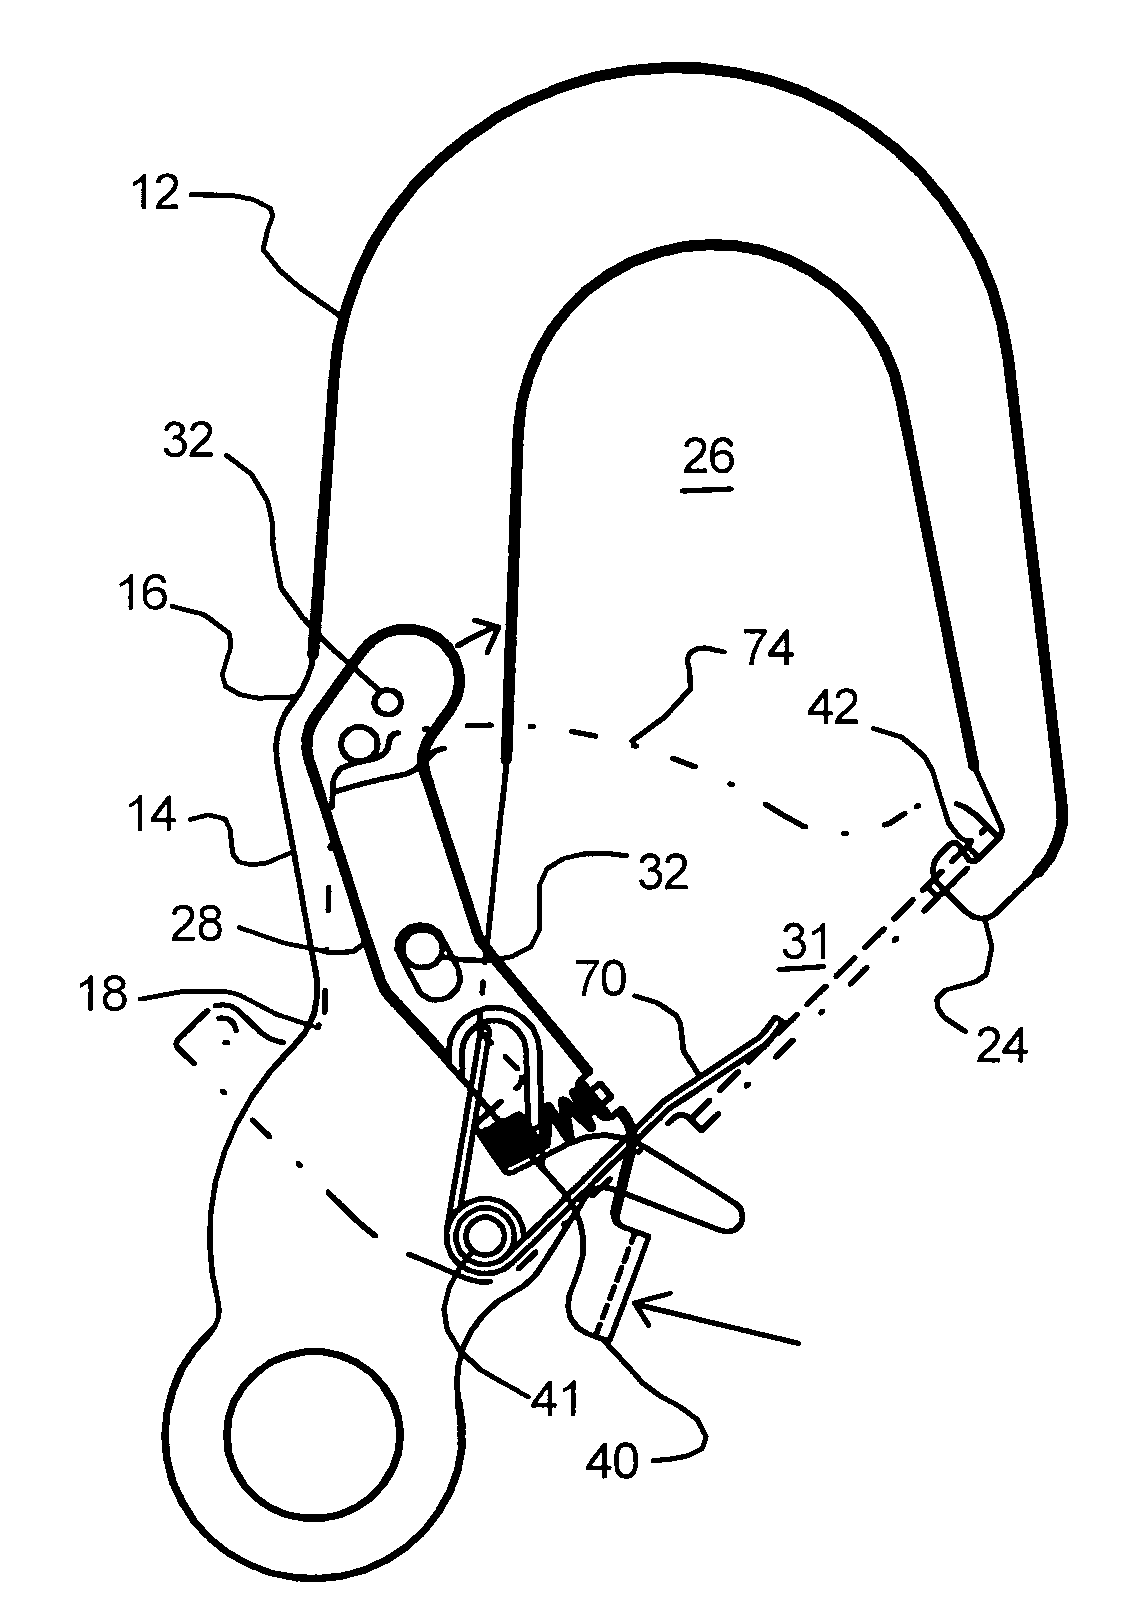 Snap hook with interlocking gate